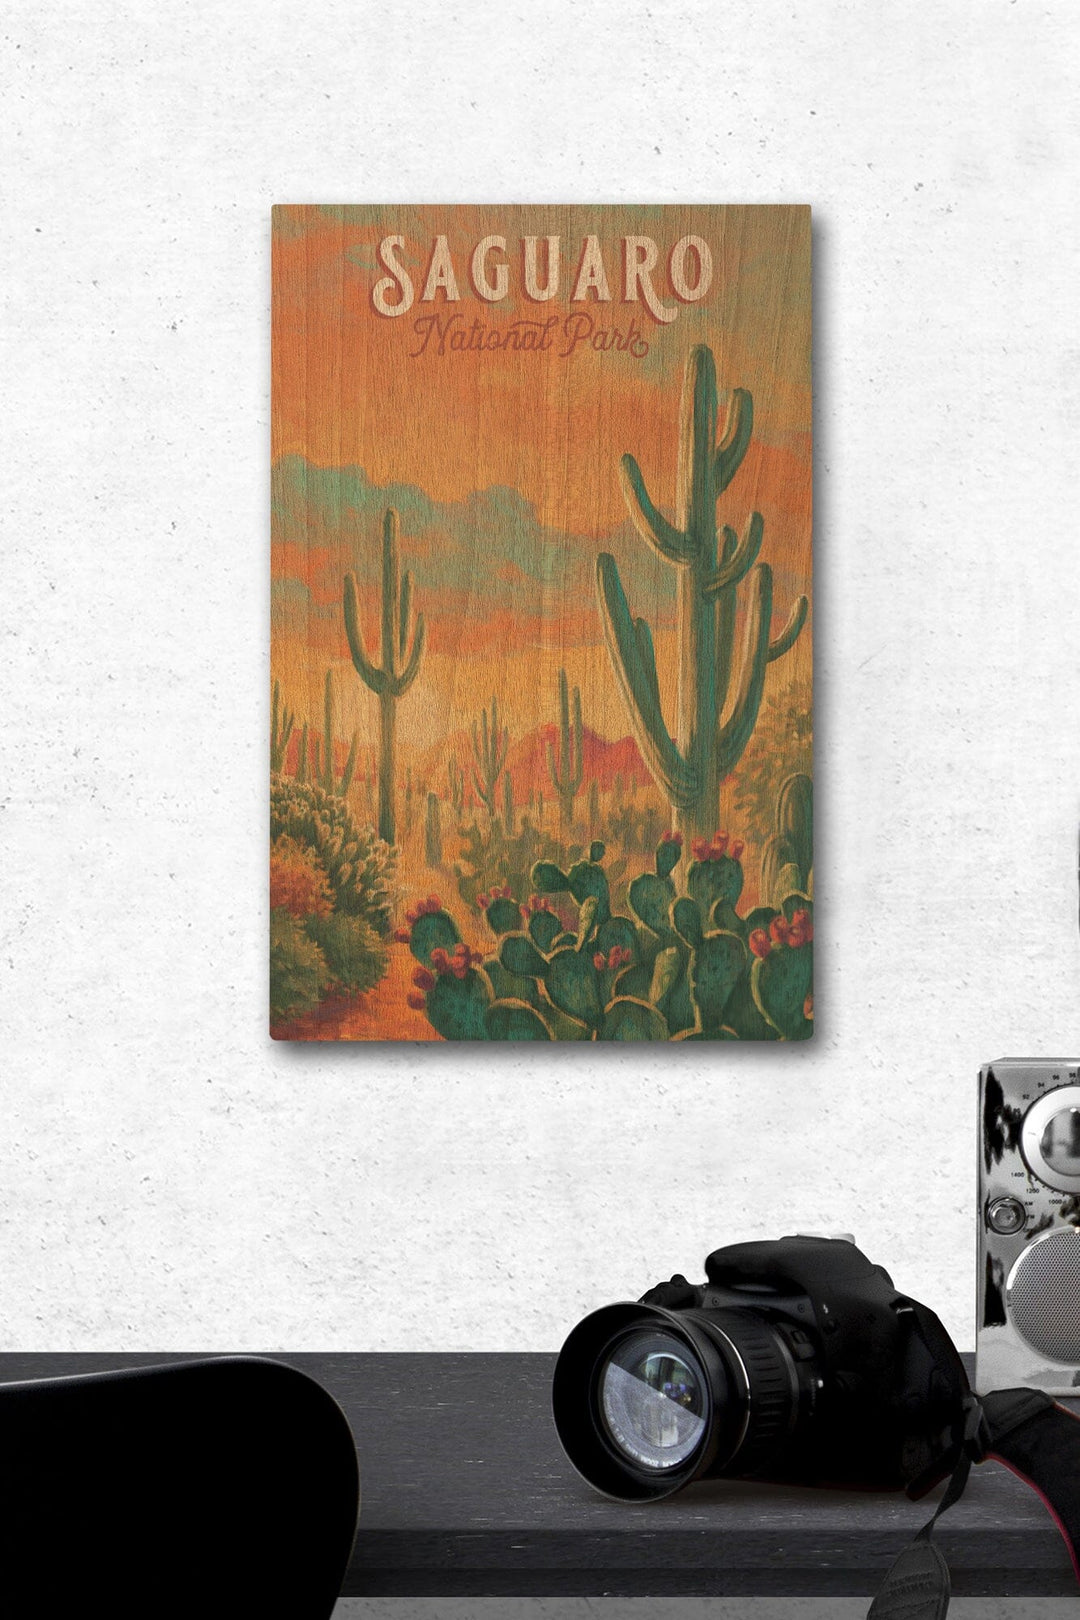 Saguaro National Park, Arizona, Oil Painting National Park Series, Lantern Press Artwork, Wood Signs and Postcards Wood Lantern Press 12 x 18 Wood Gallery Print 